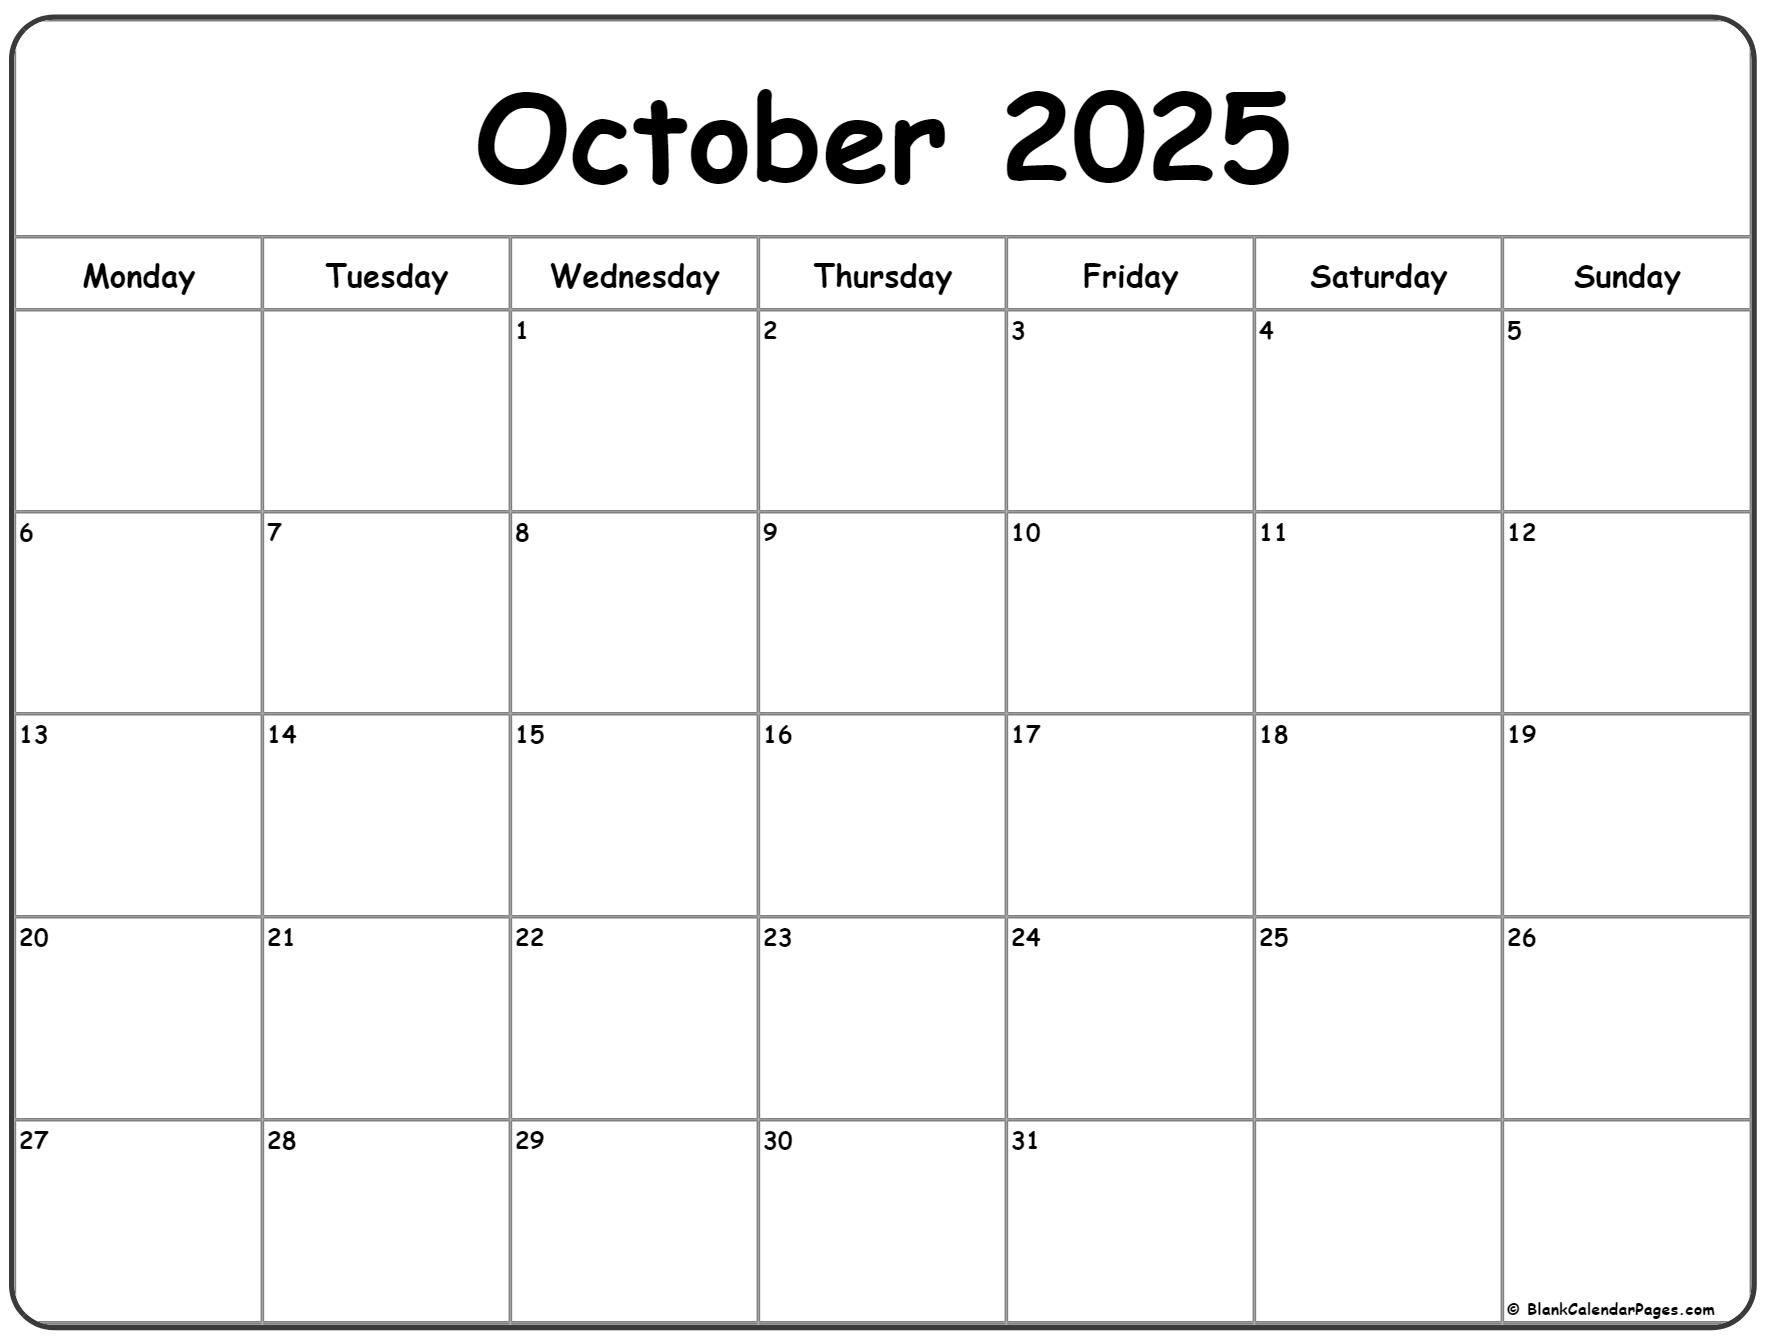 October 2025 Monday calendar. Monday to Sunday